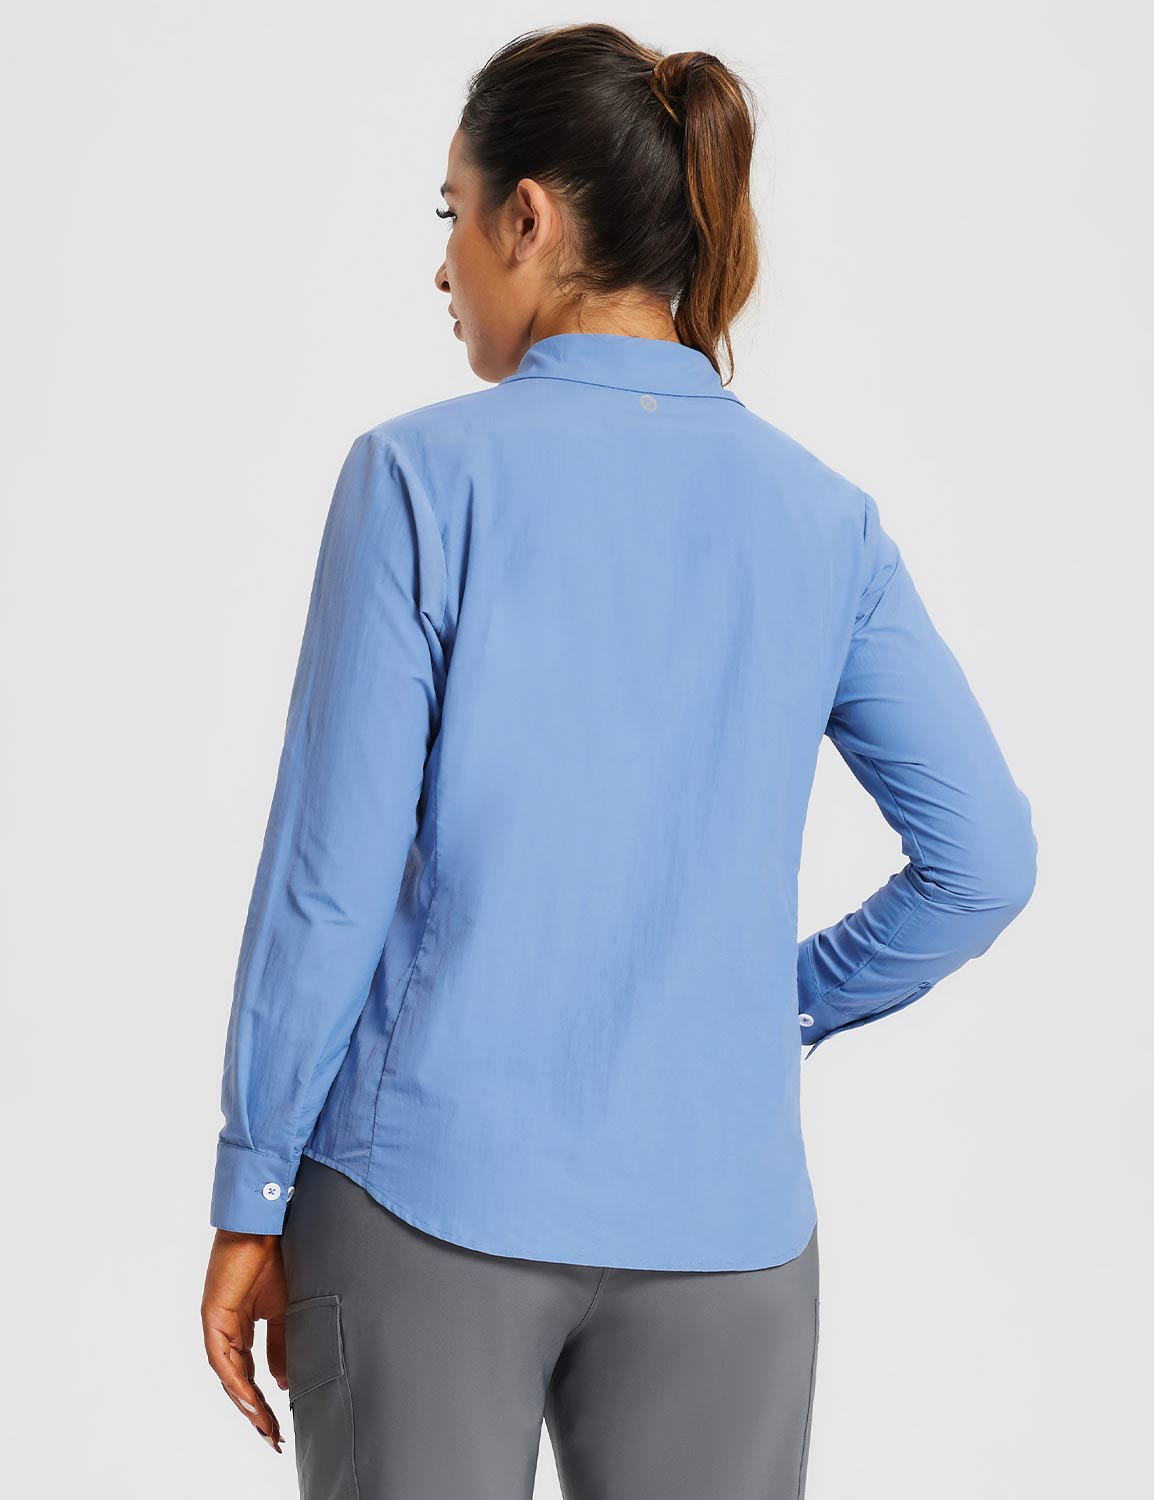 Baleaf Women's Quick-Dry UPF 50+ Sun Shirts Ashleigh Blue Back